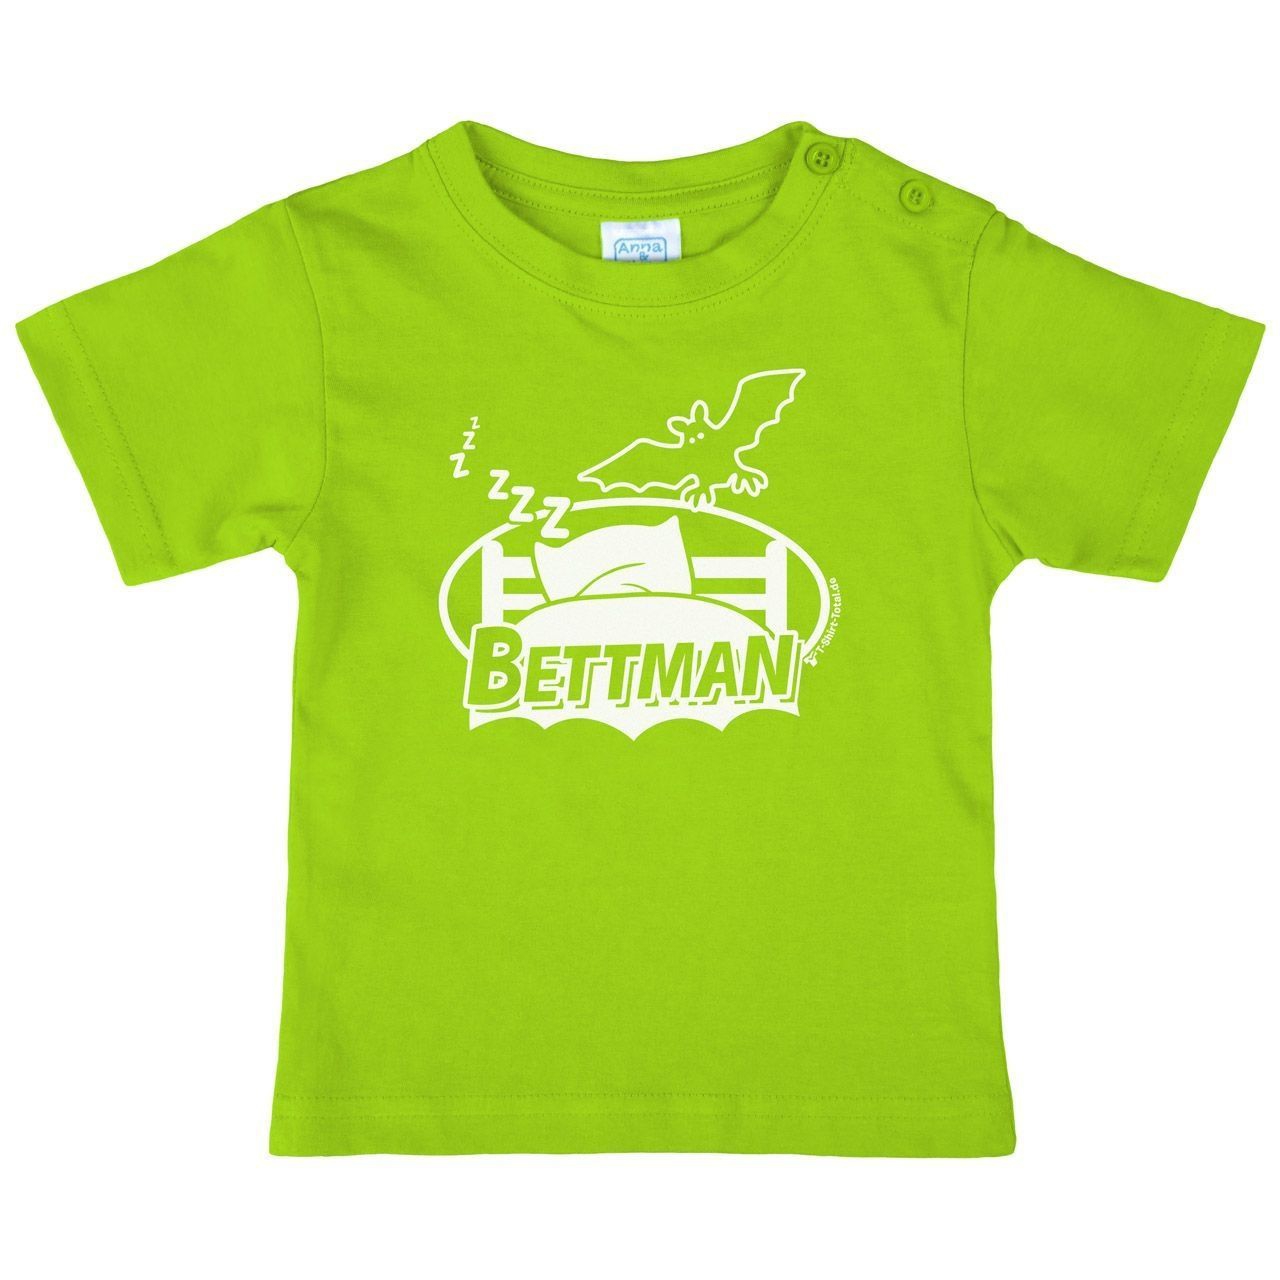 Bettman Kinder T-Shirt hellgrün 56 / 62